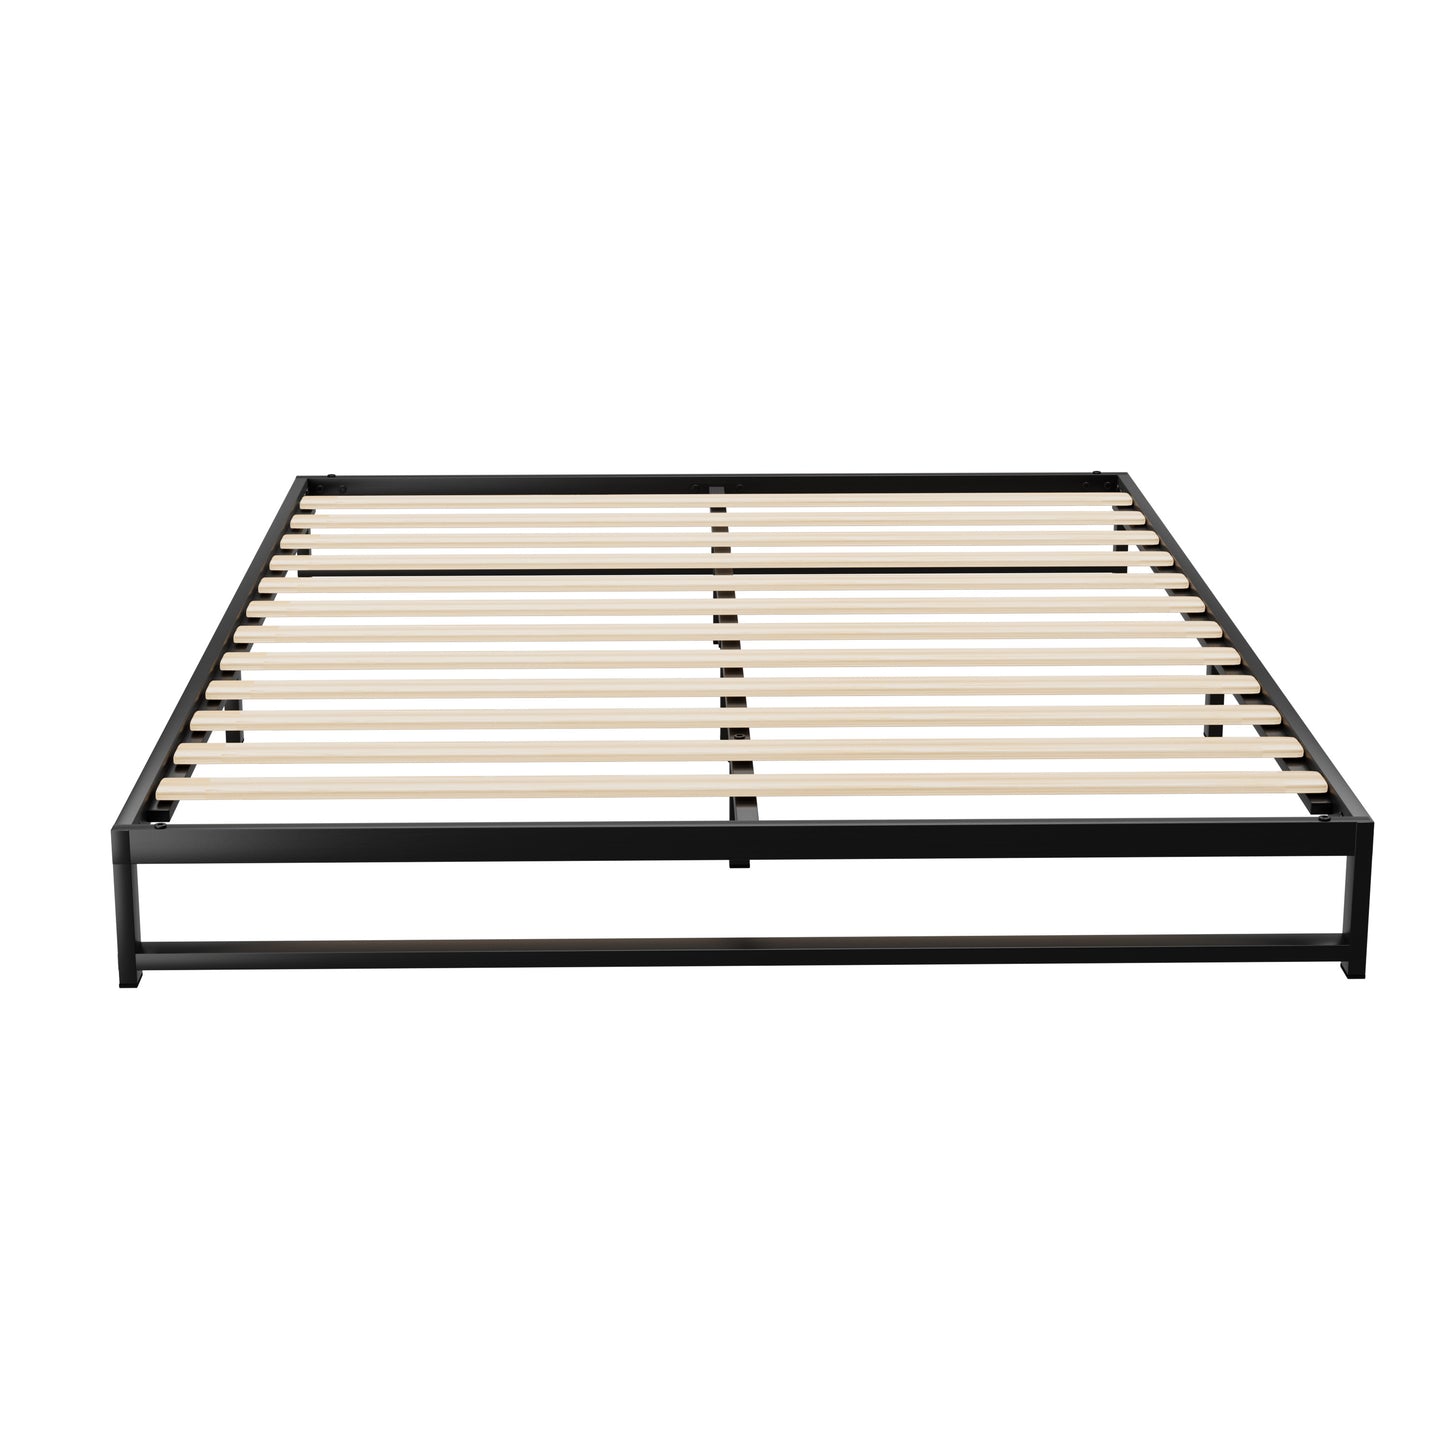 Willow Metal Bed Frame Bed Base Mattress Platform - Black Double